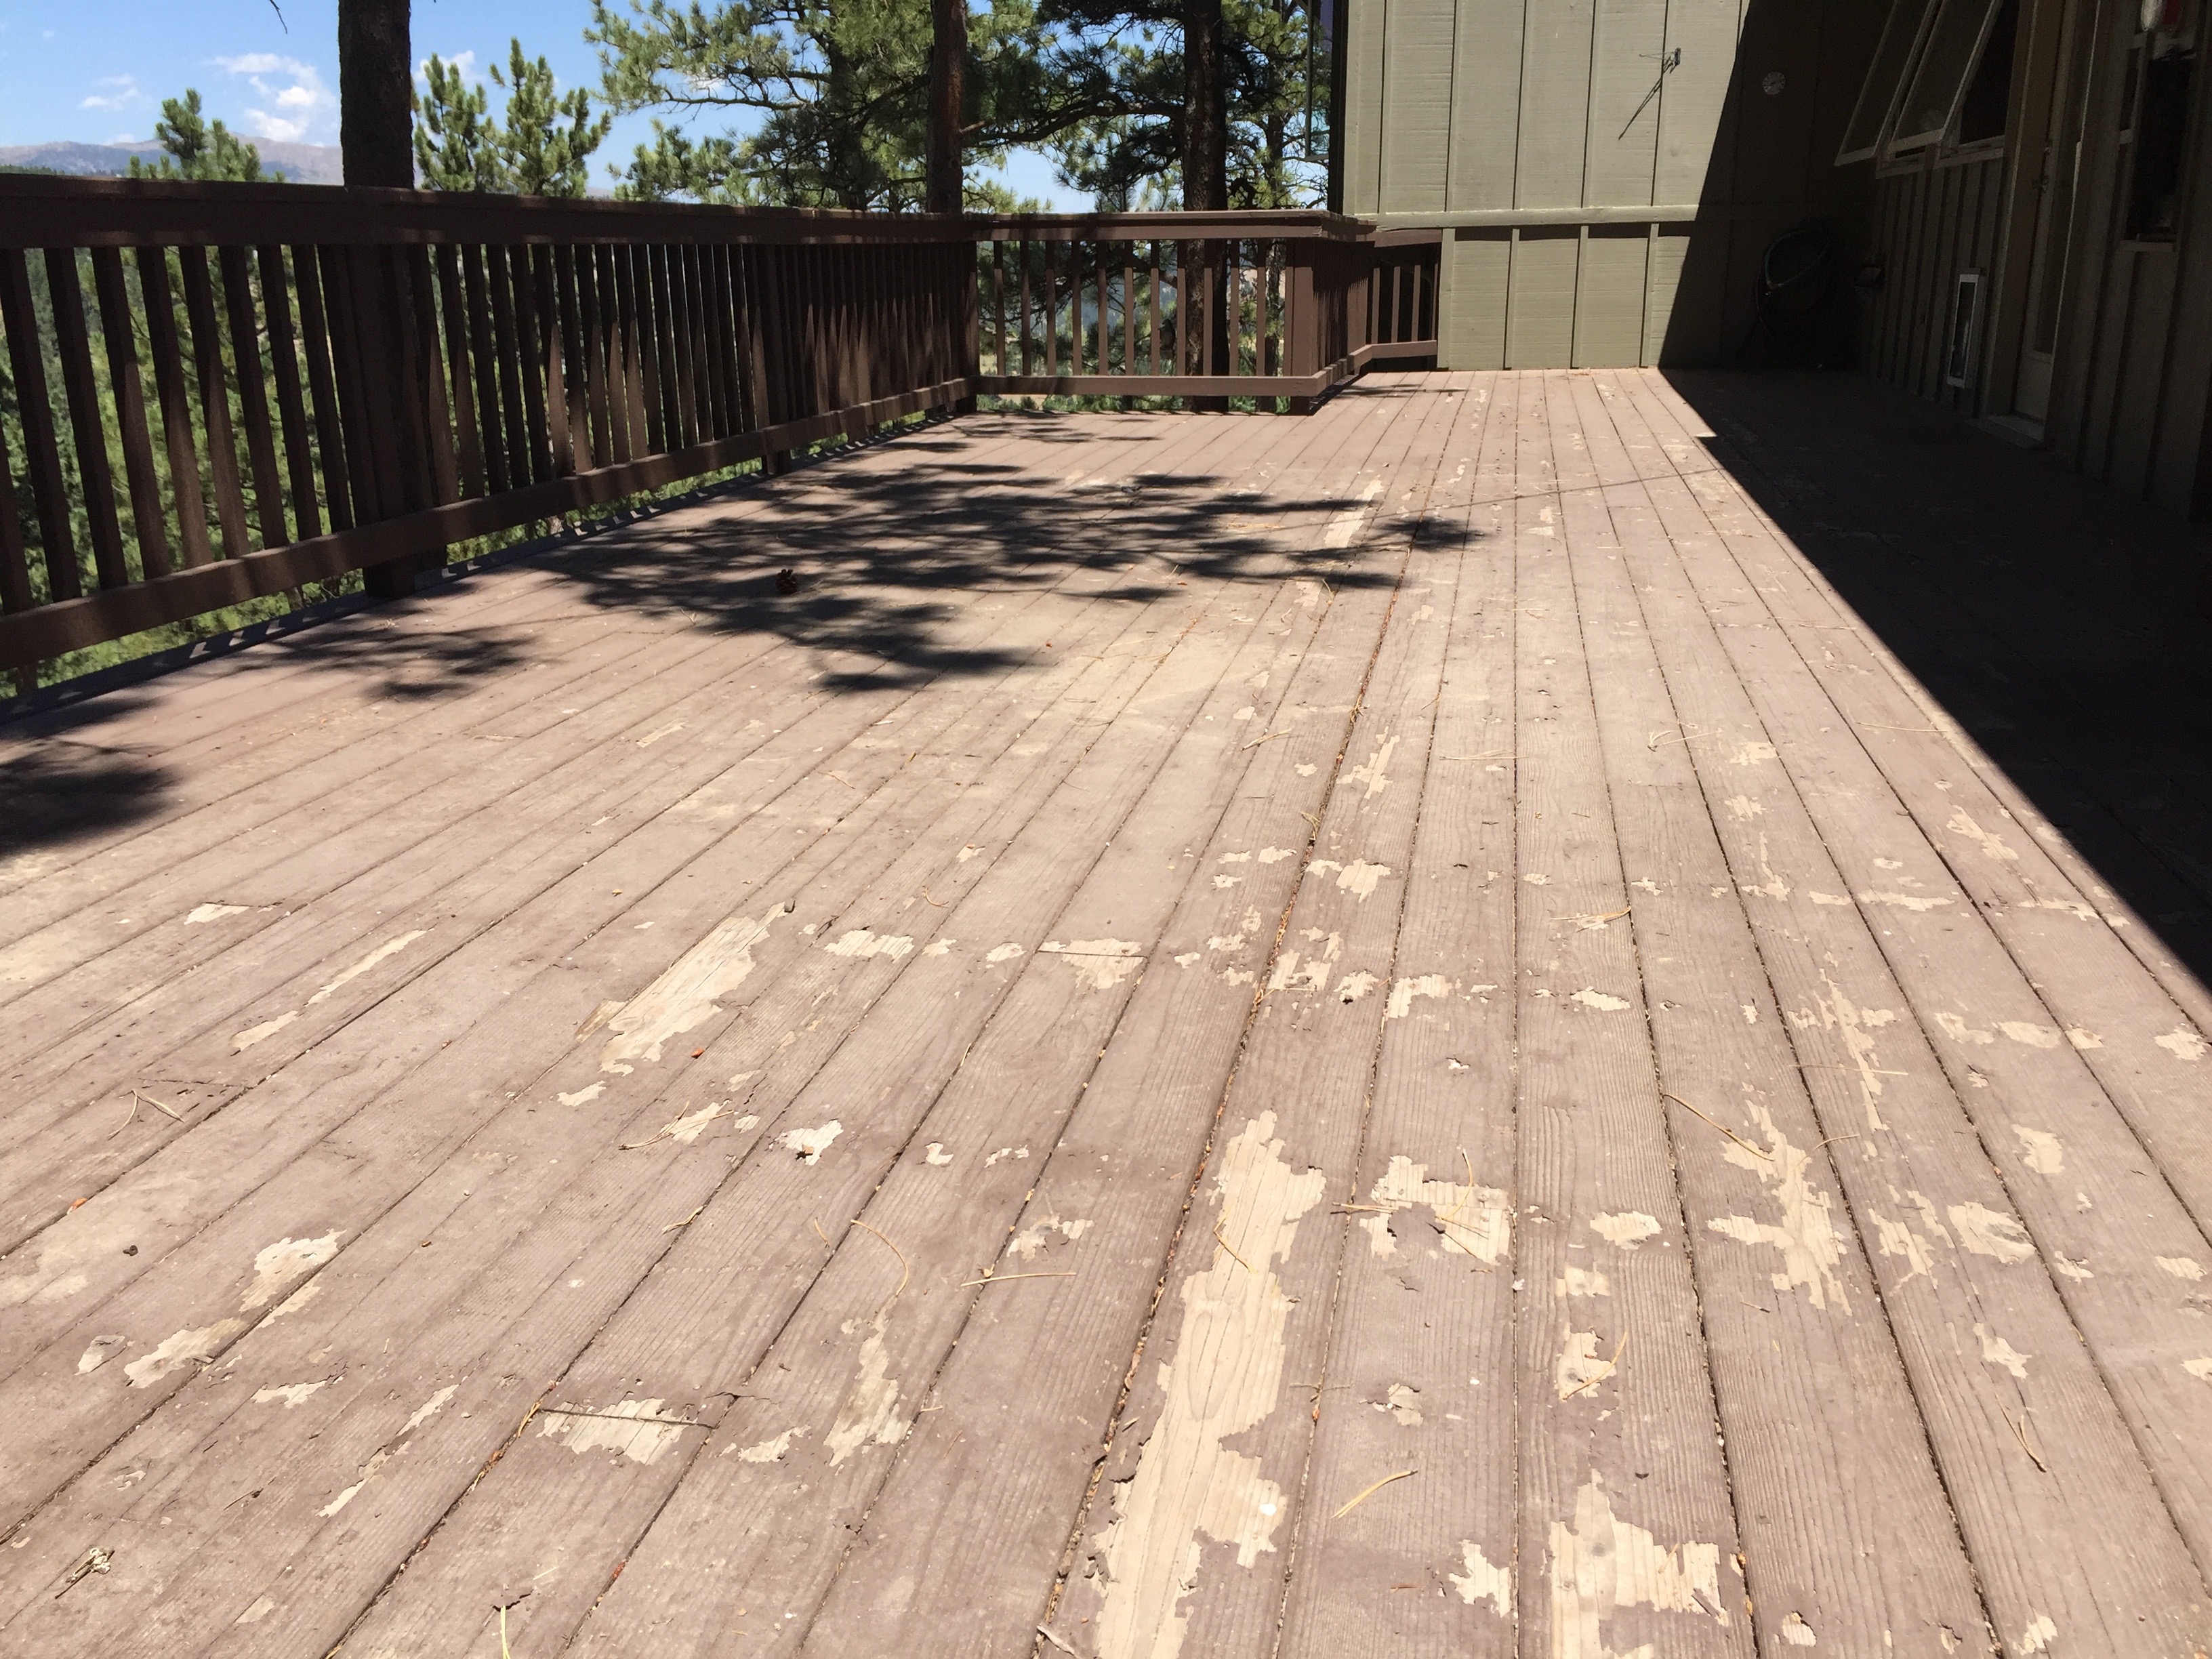 peeling deck paint in need of refinishing